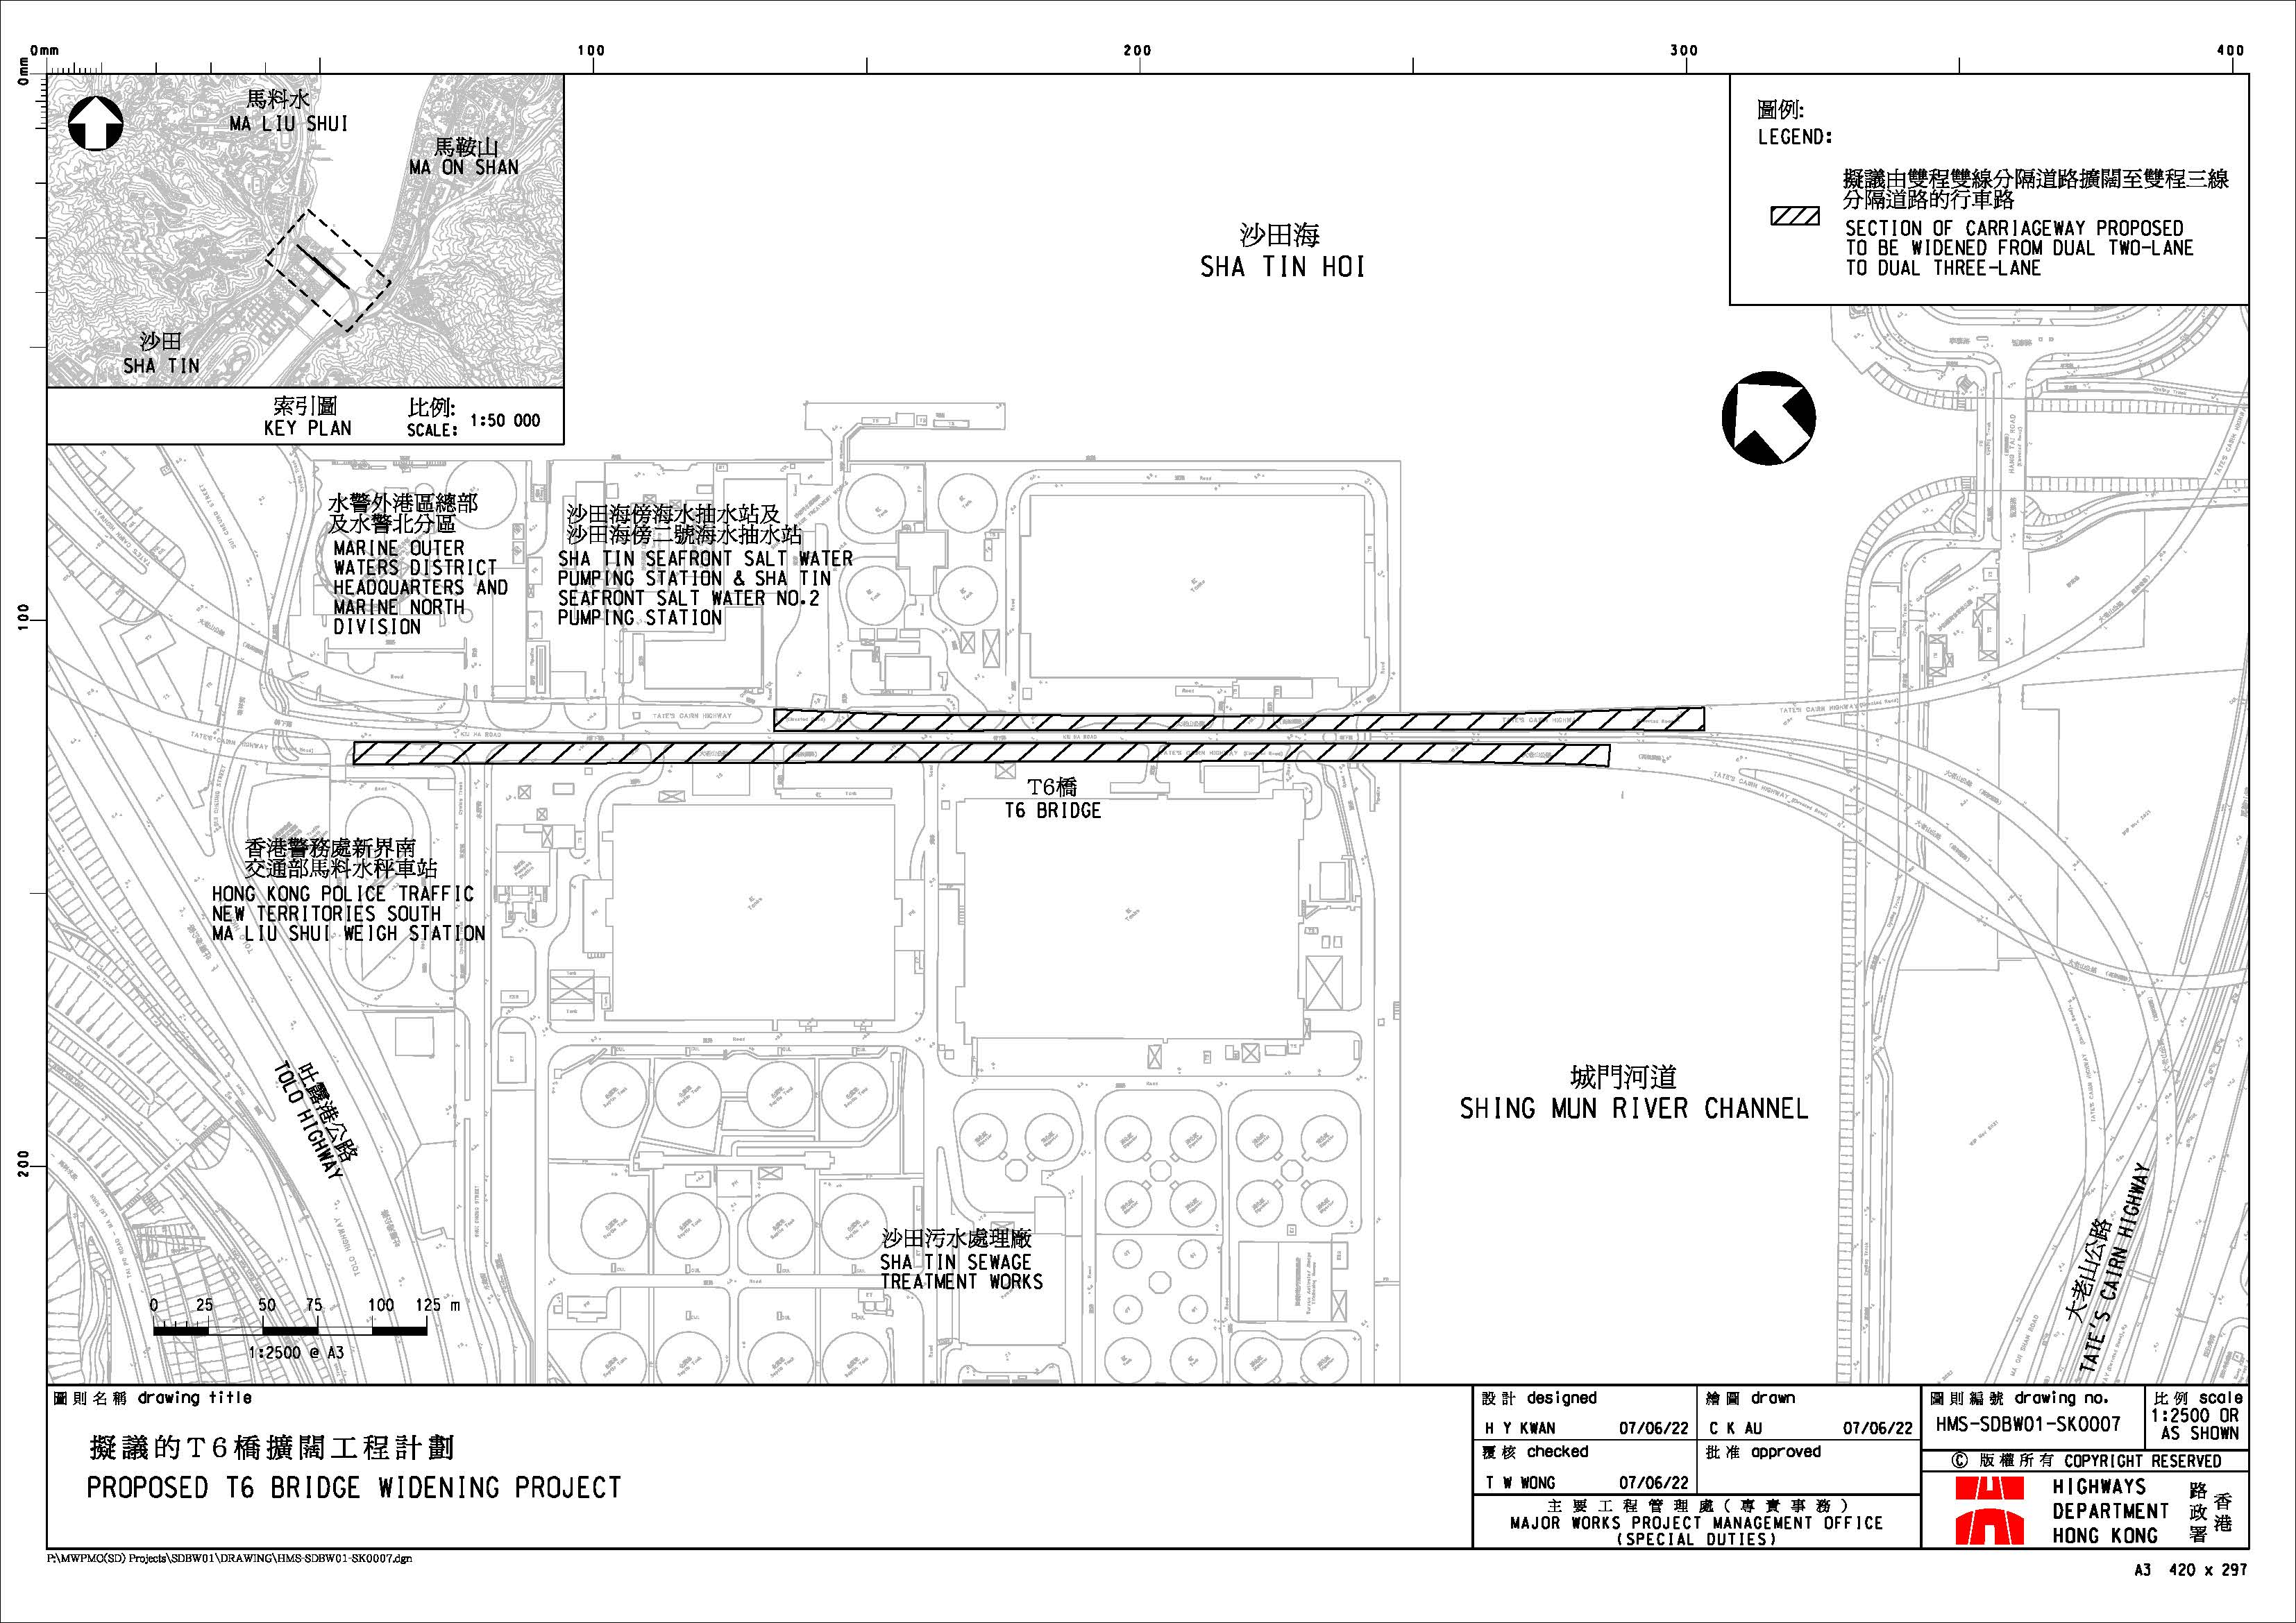 Layout Plan of Widening of T6 Bridge of Tate's Cairn Highway